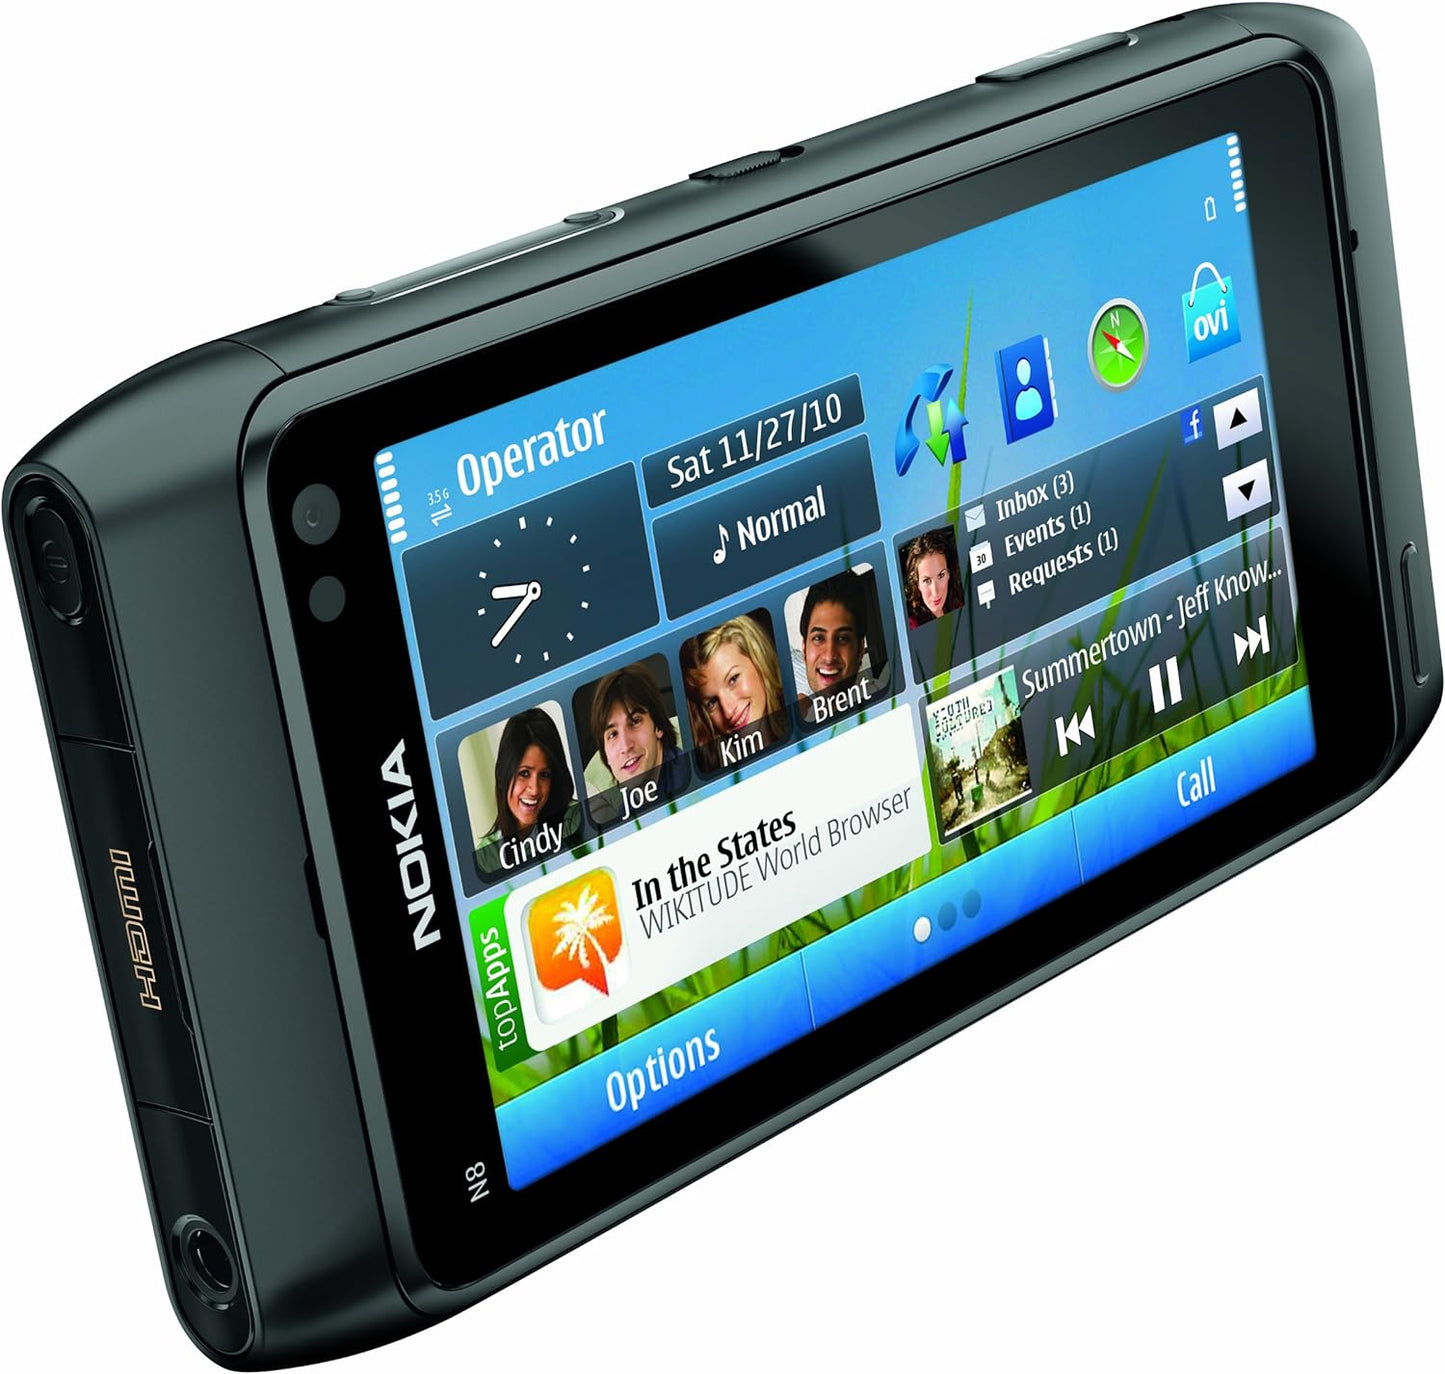 Nokia N8 -  Sim Free, Original Box